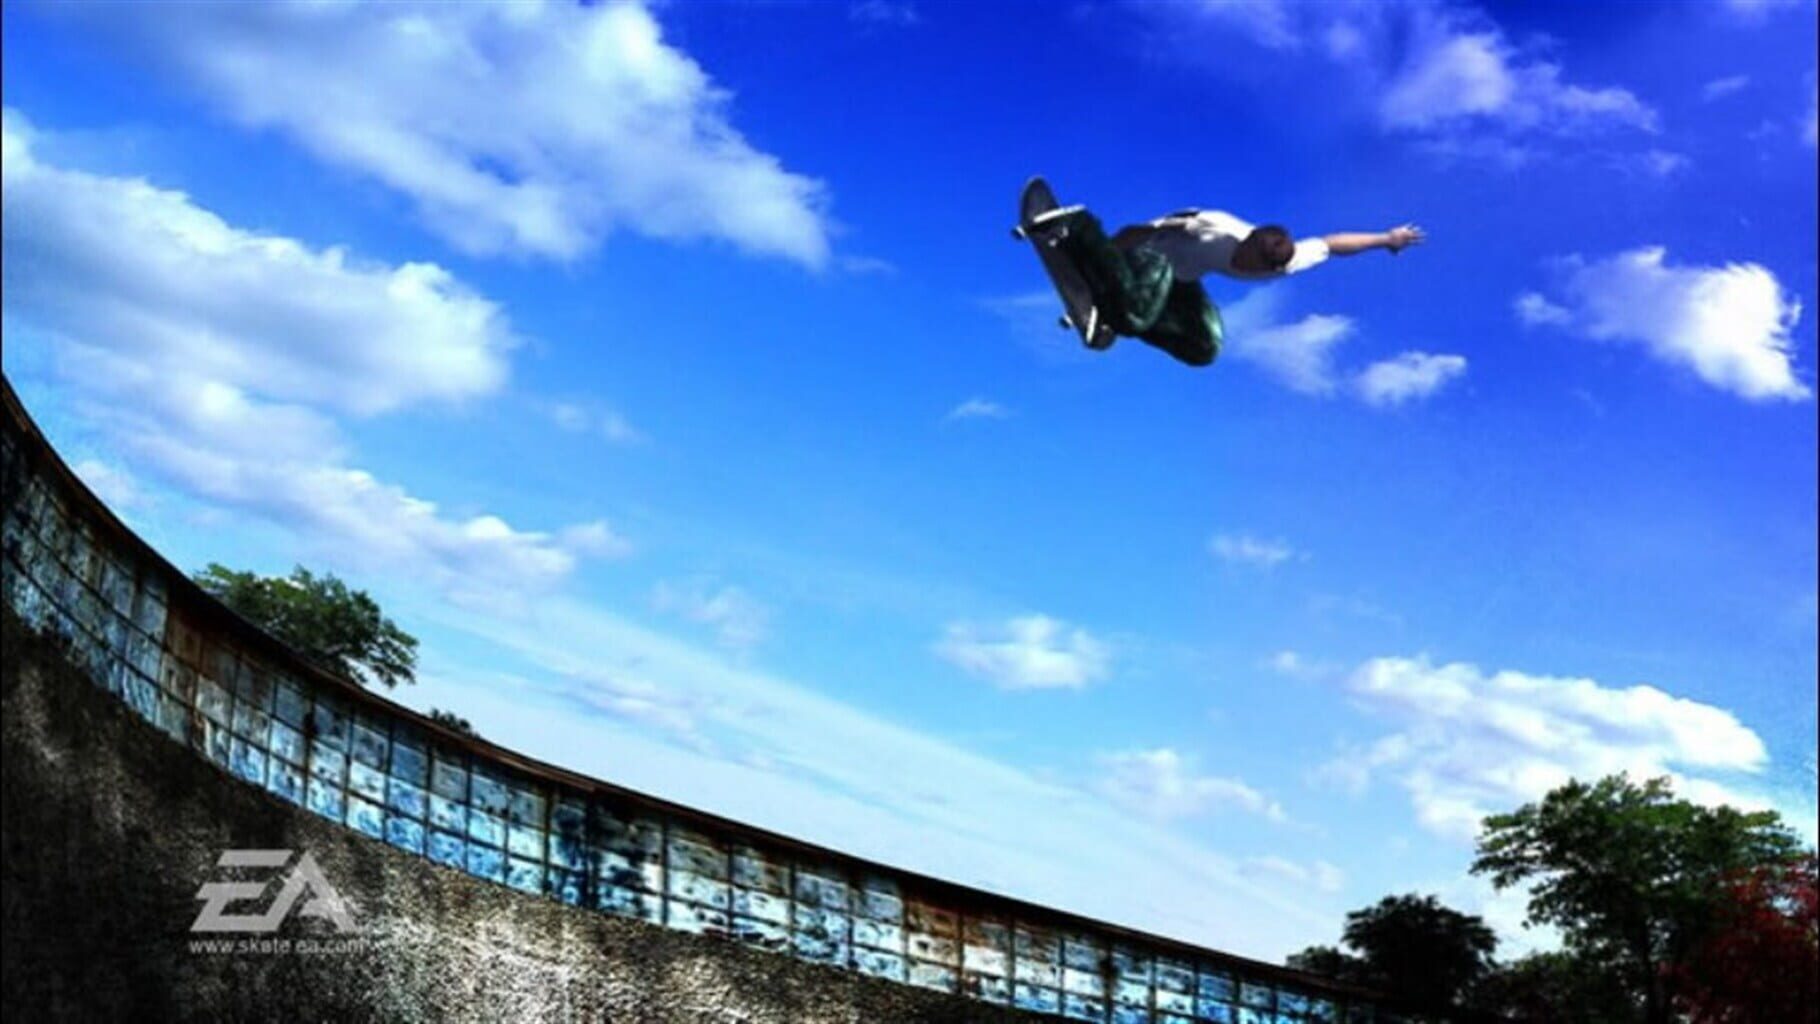 Skate. screenshots